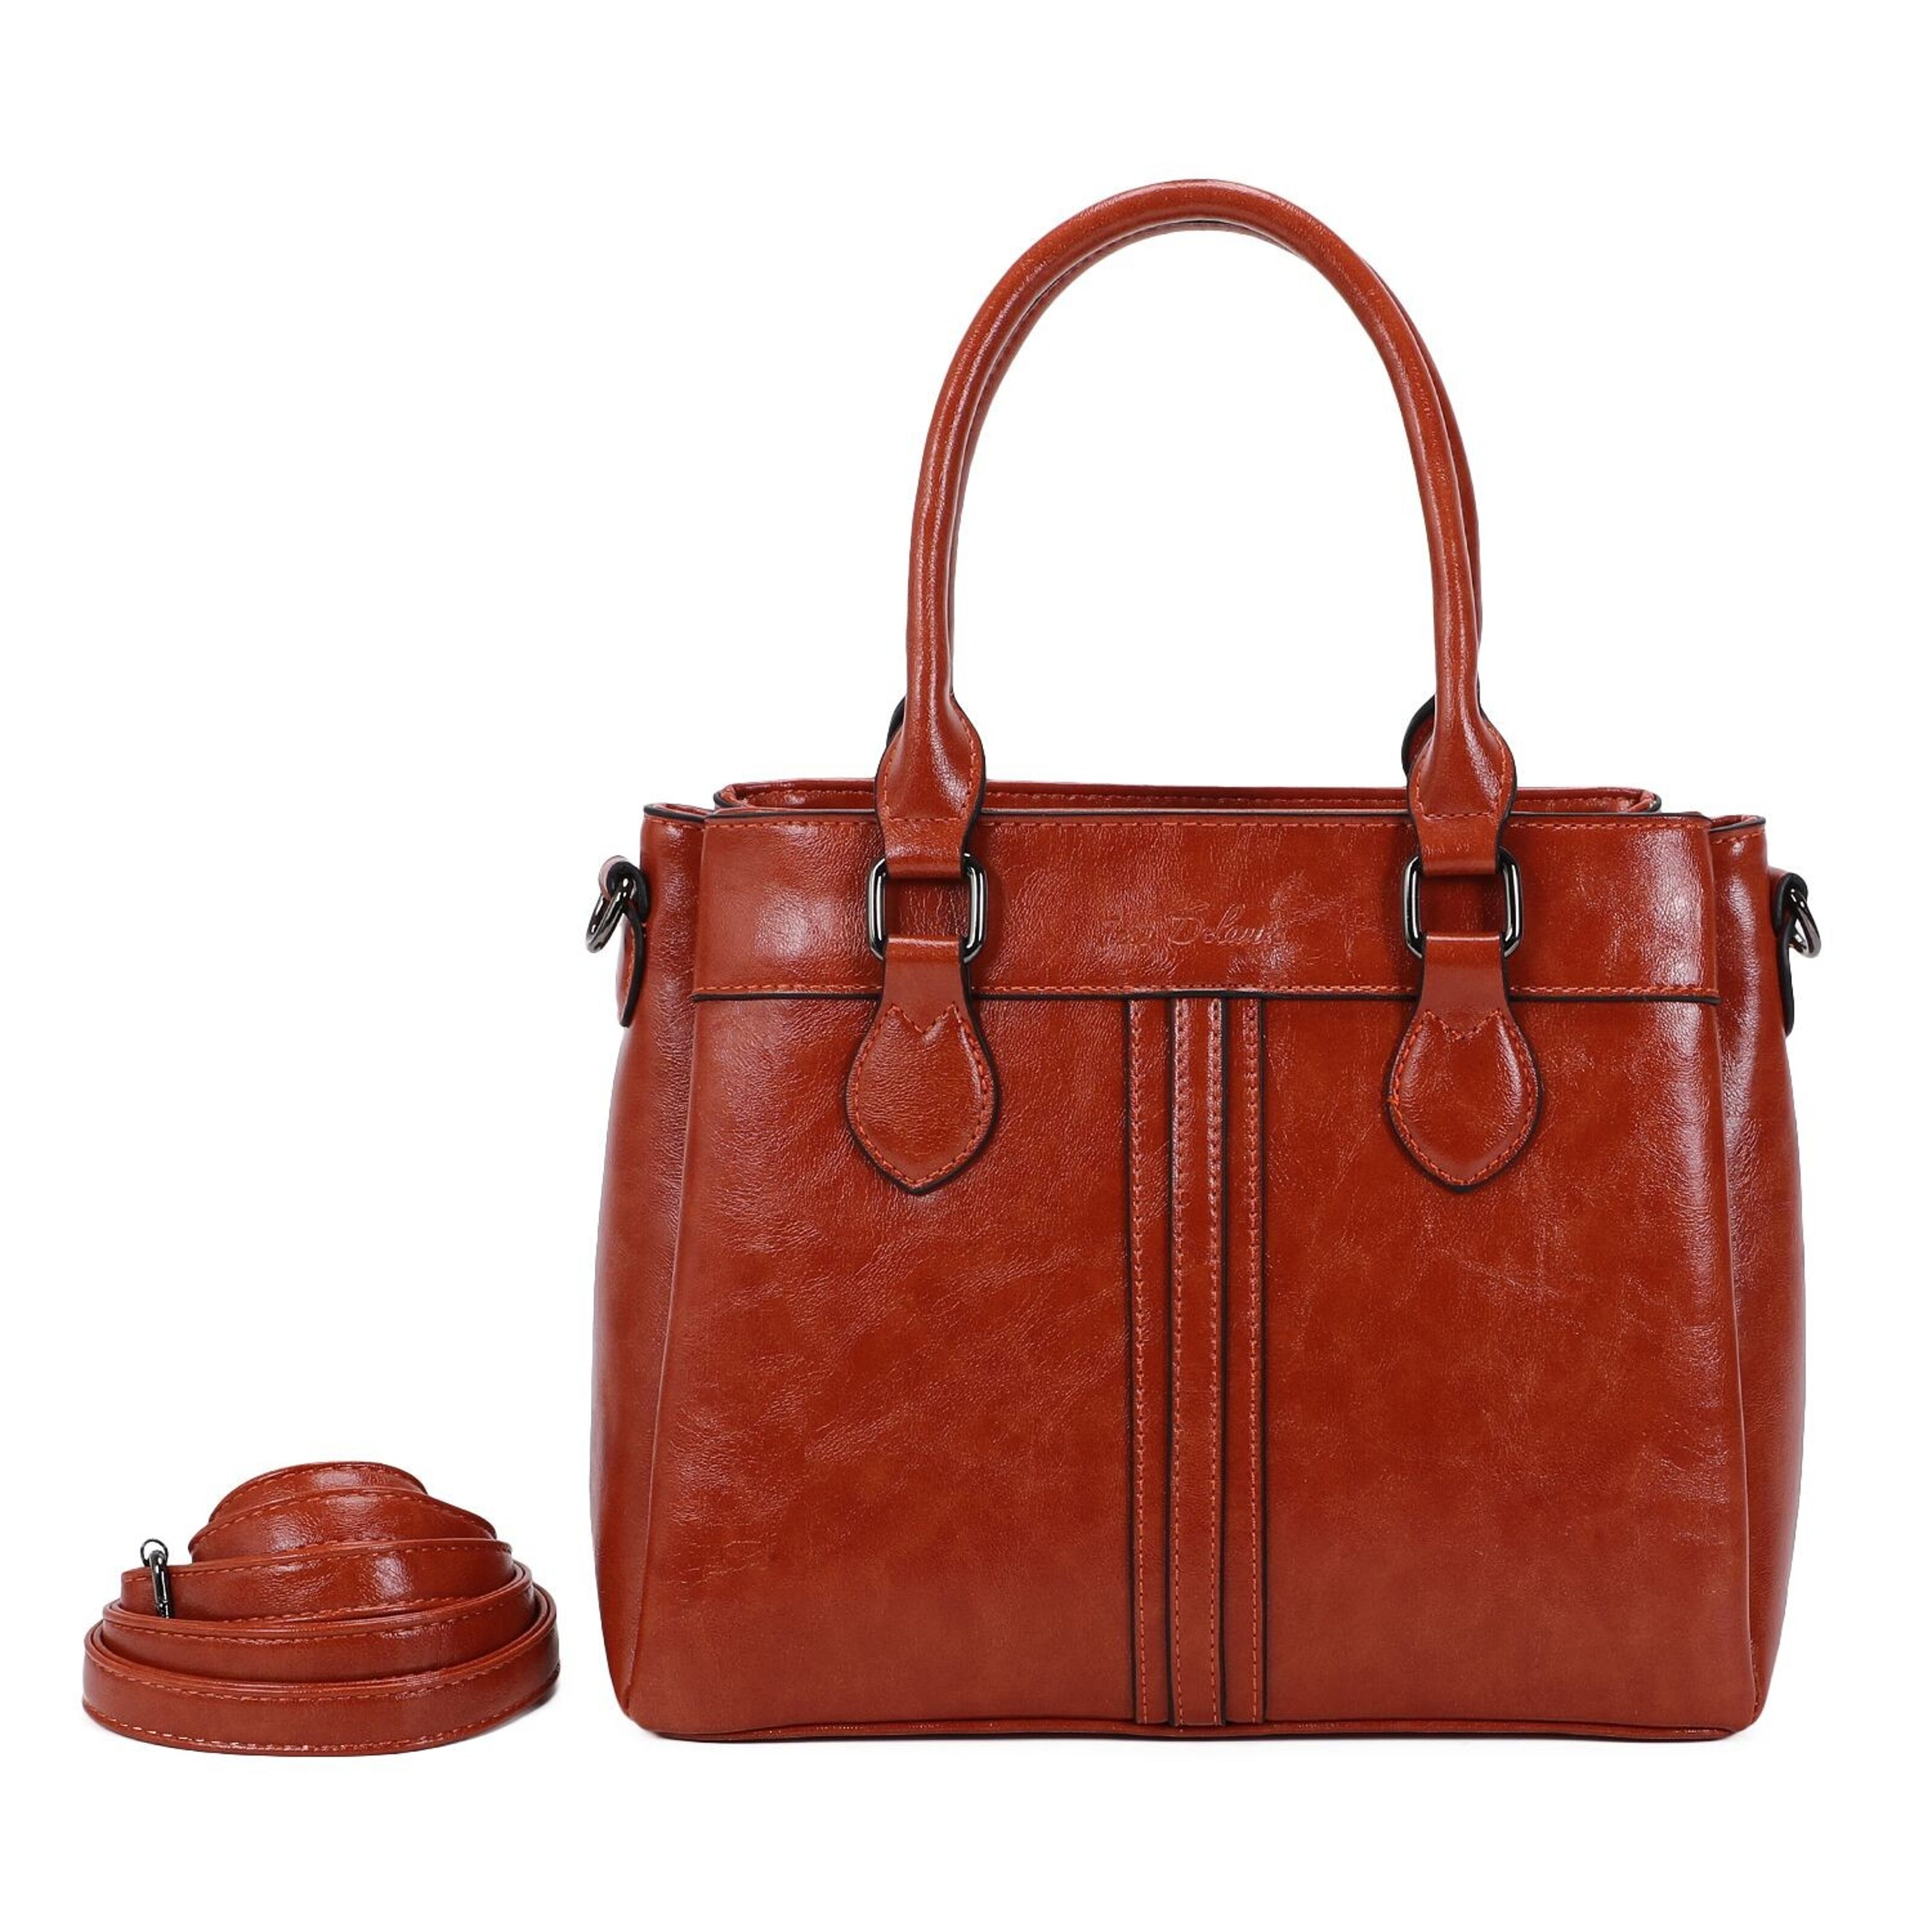 Buy wholesale 3 compartment handbag